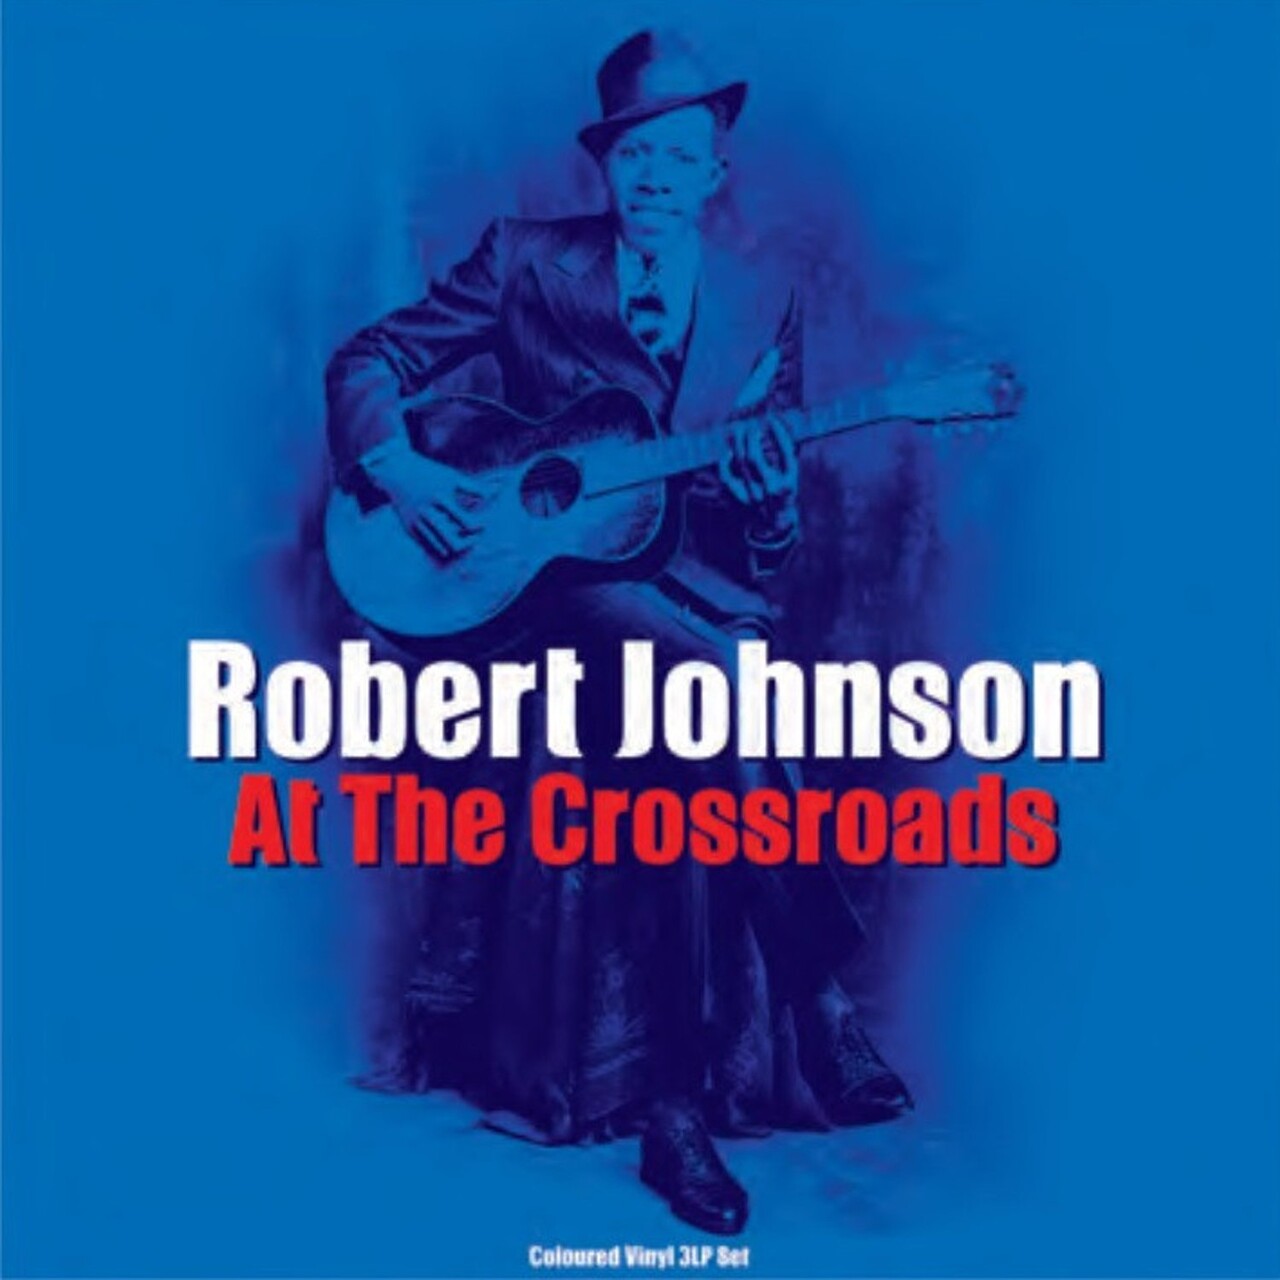 Crossroad Blues, Robert Johnson - Qobuz